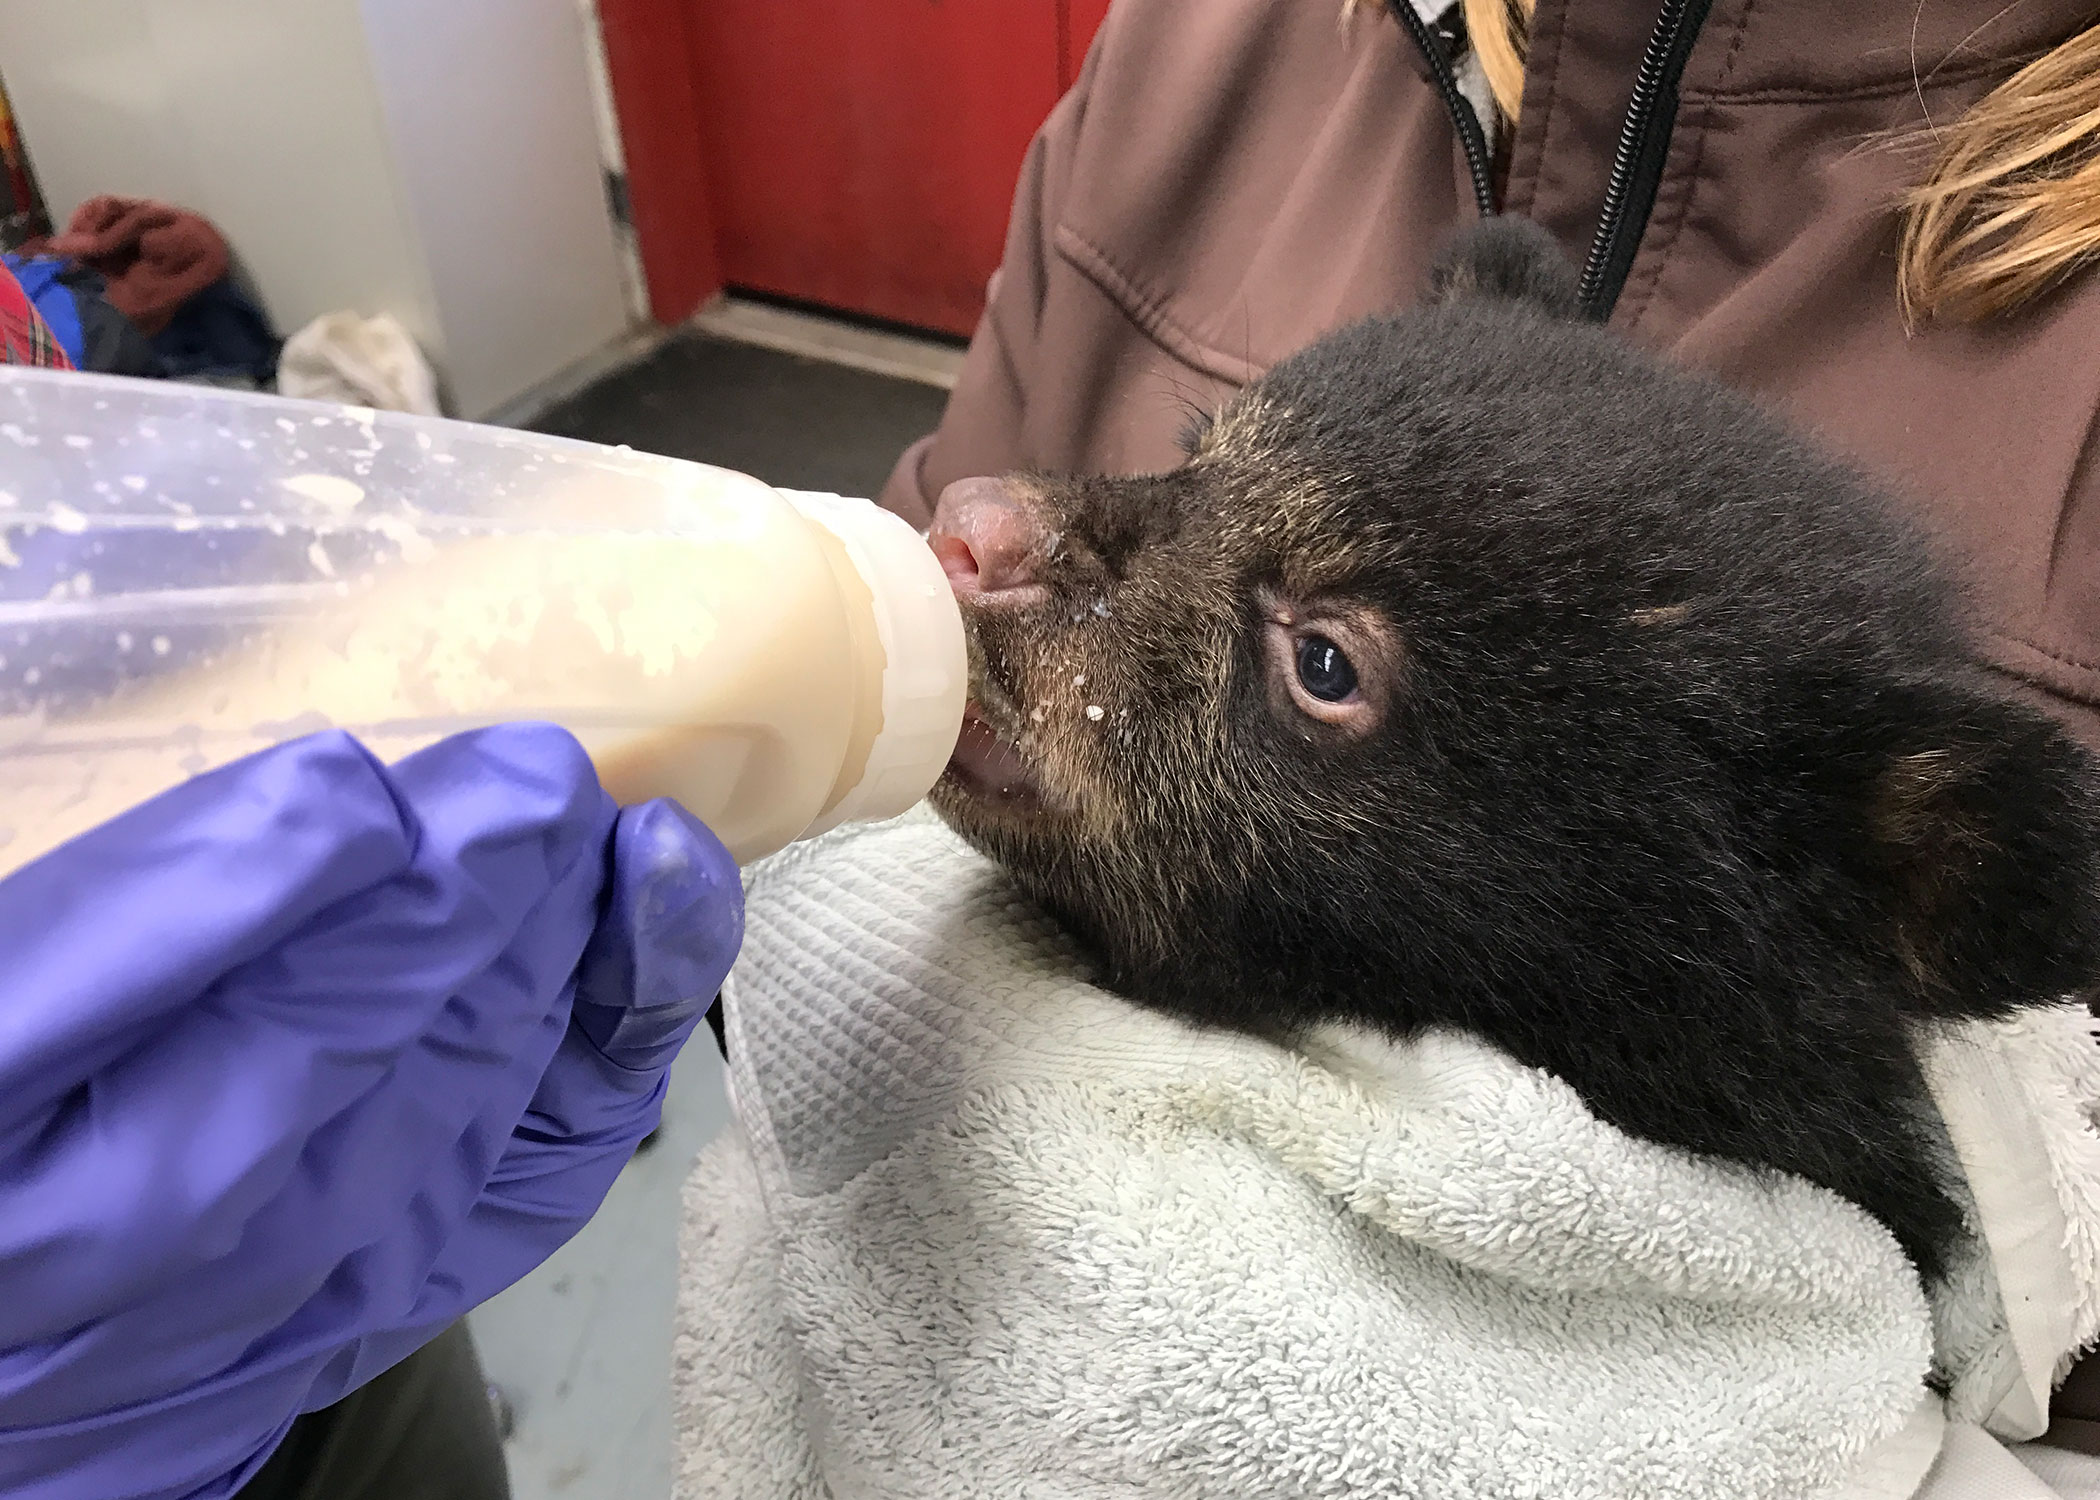 Distressed Black Bear Cub? Leave Alone, Call Experts